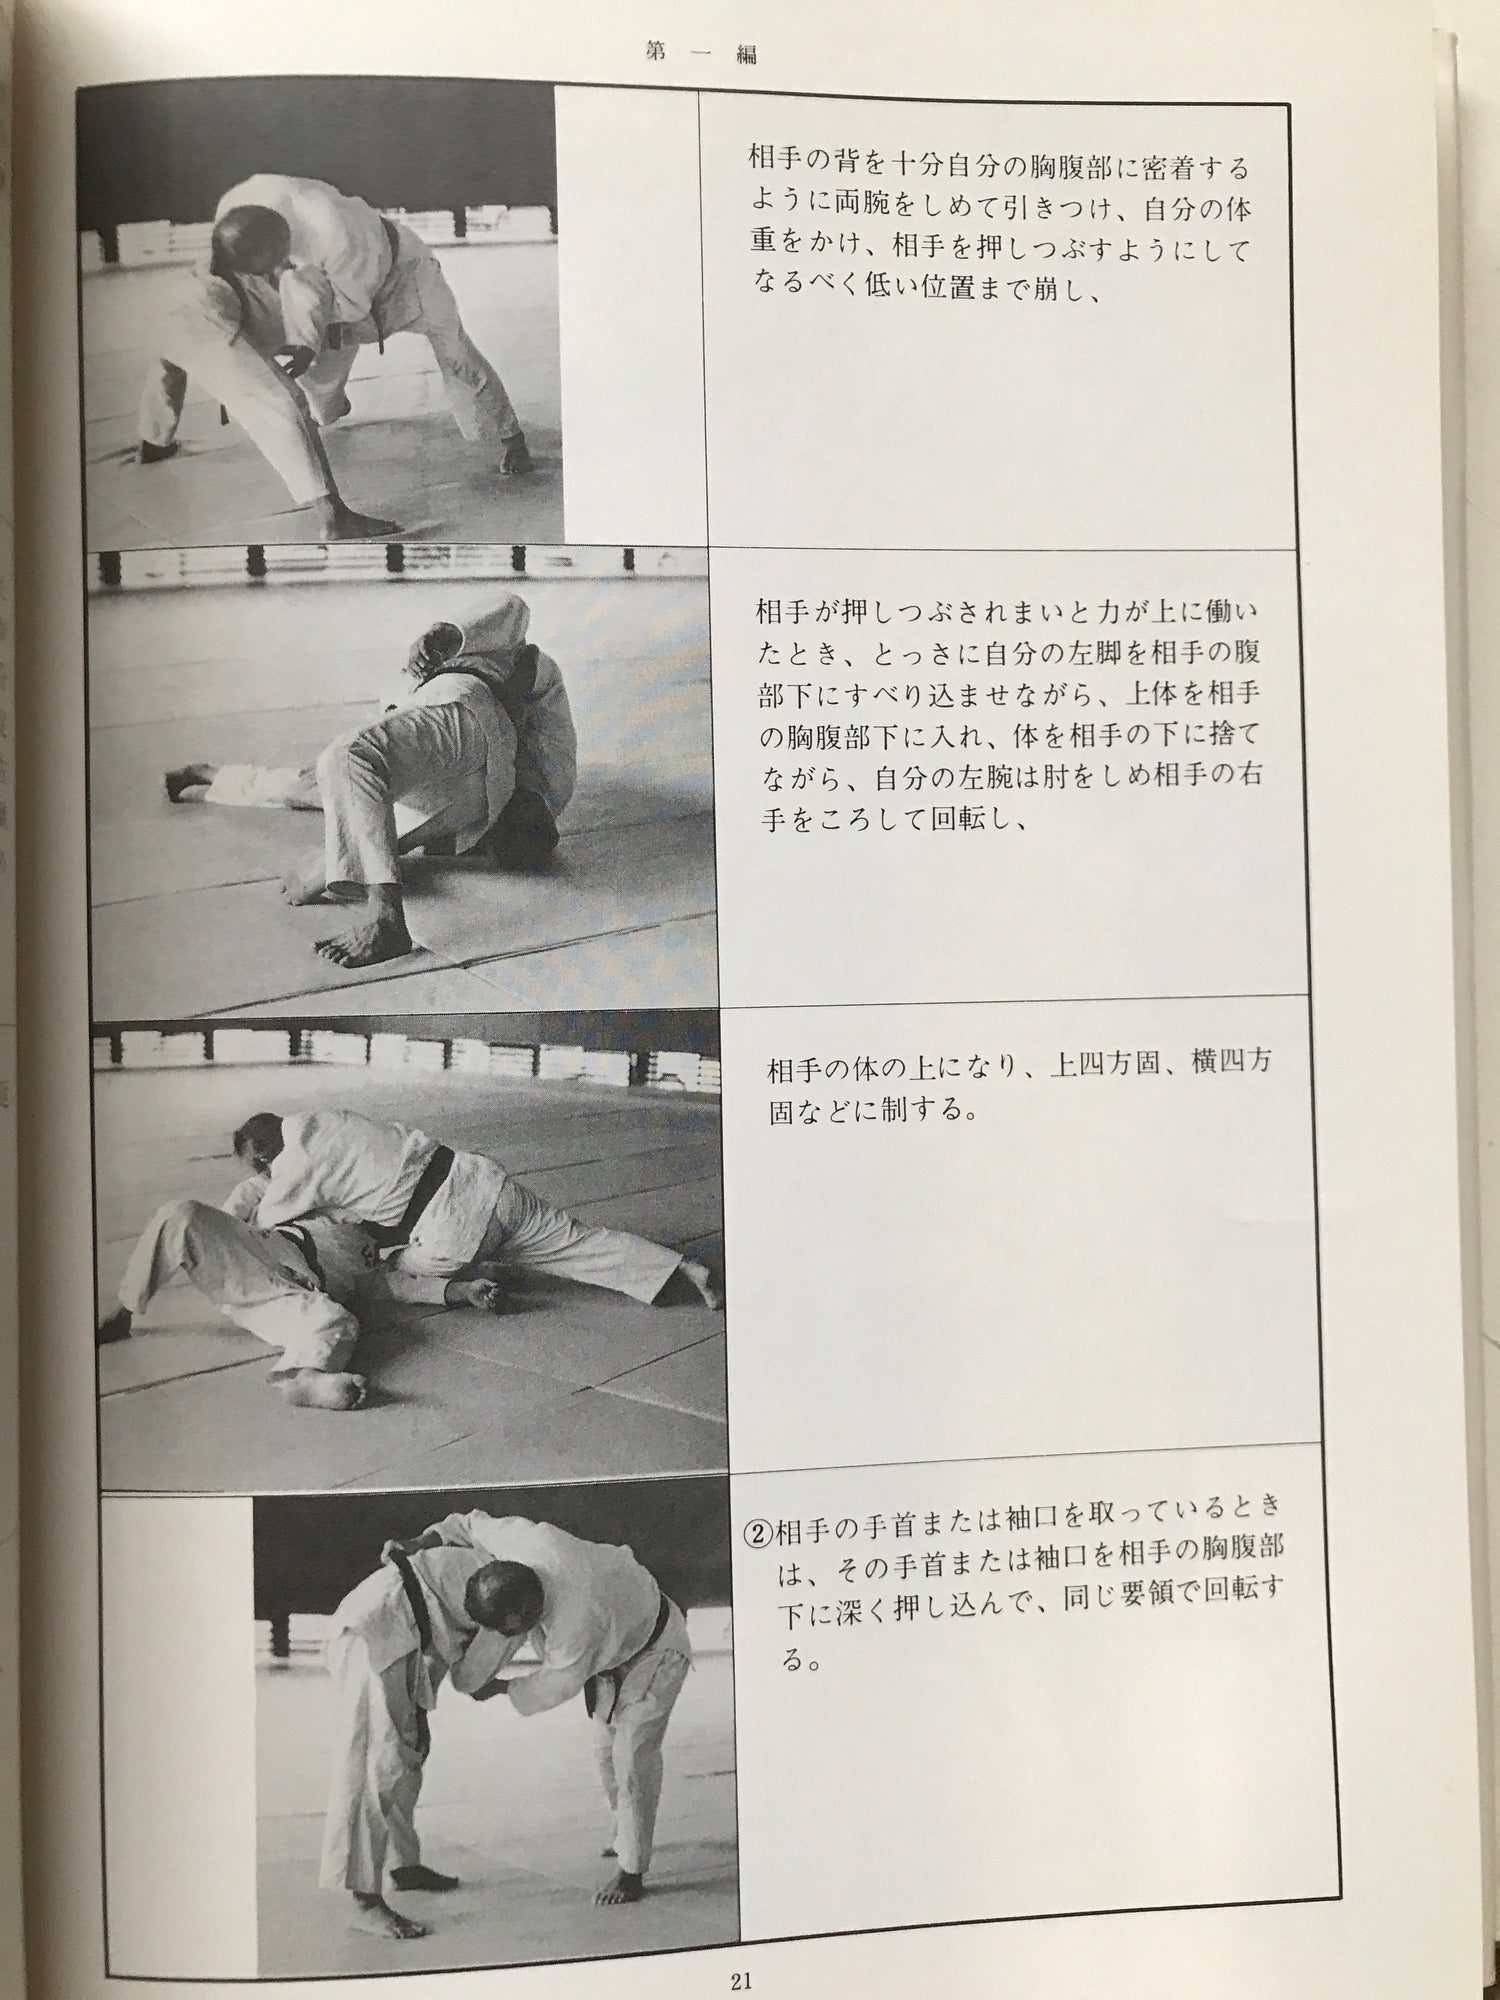 Kosen Judo Textbook (Preowned) - Budovideos Inc